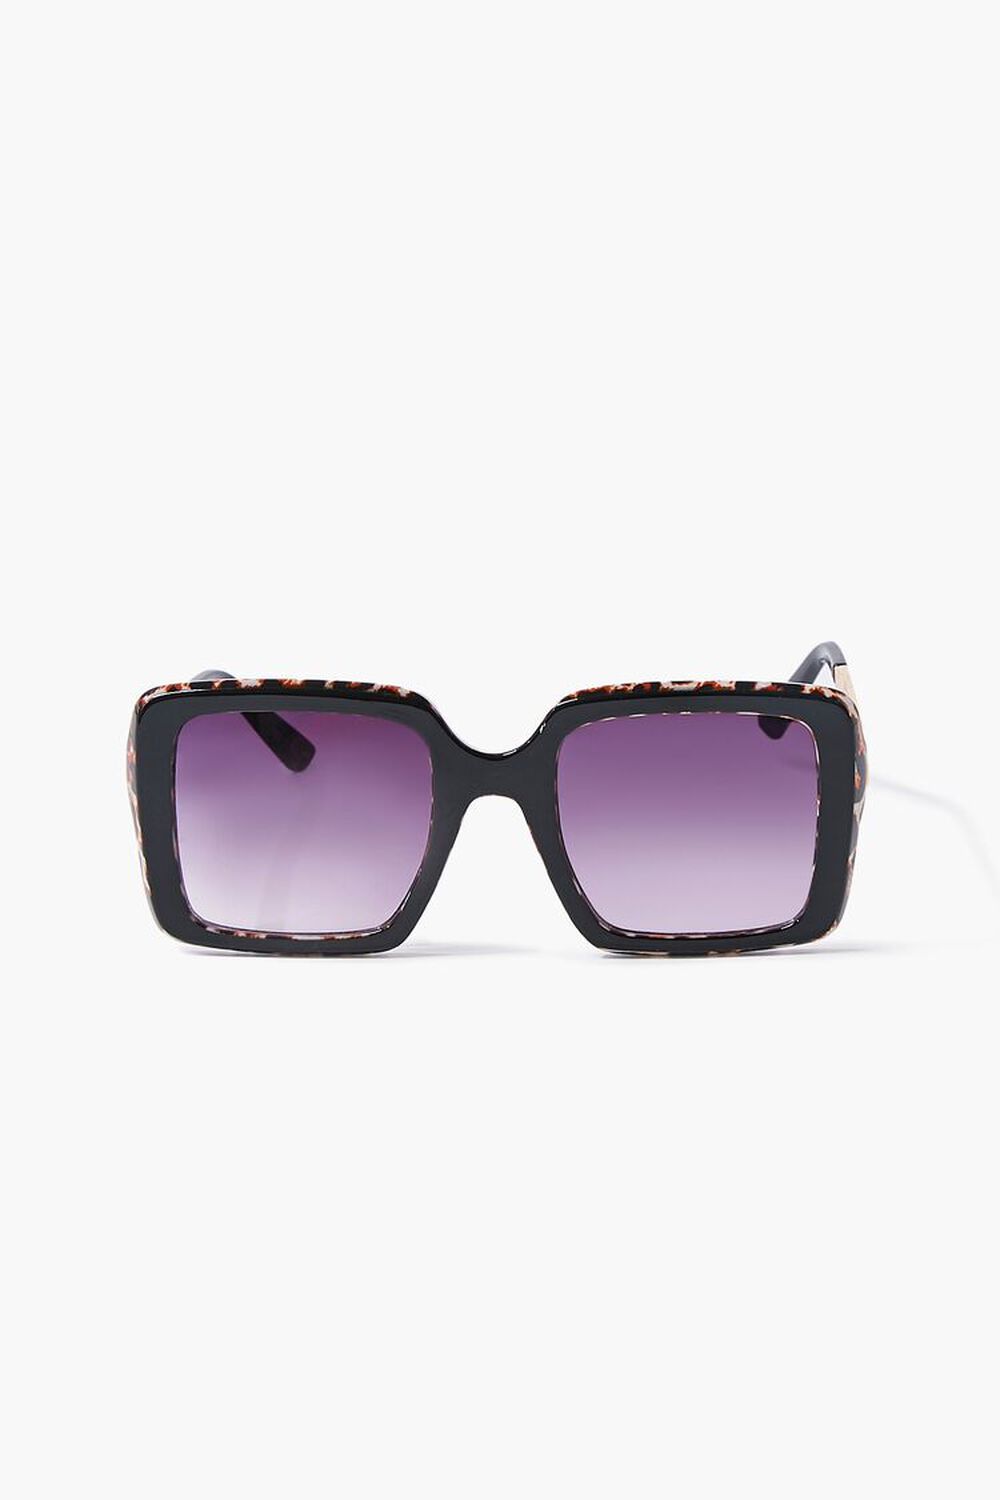 BLACK/BLACK Leopard Print-Trim Square Sunglasses, image 1